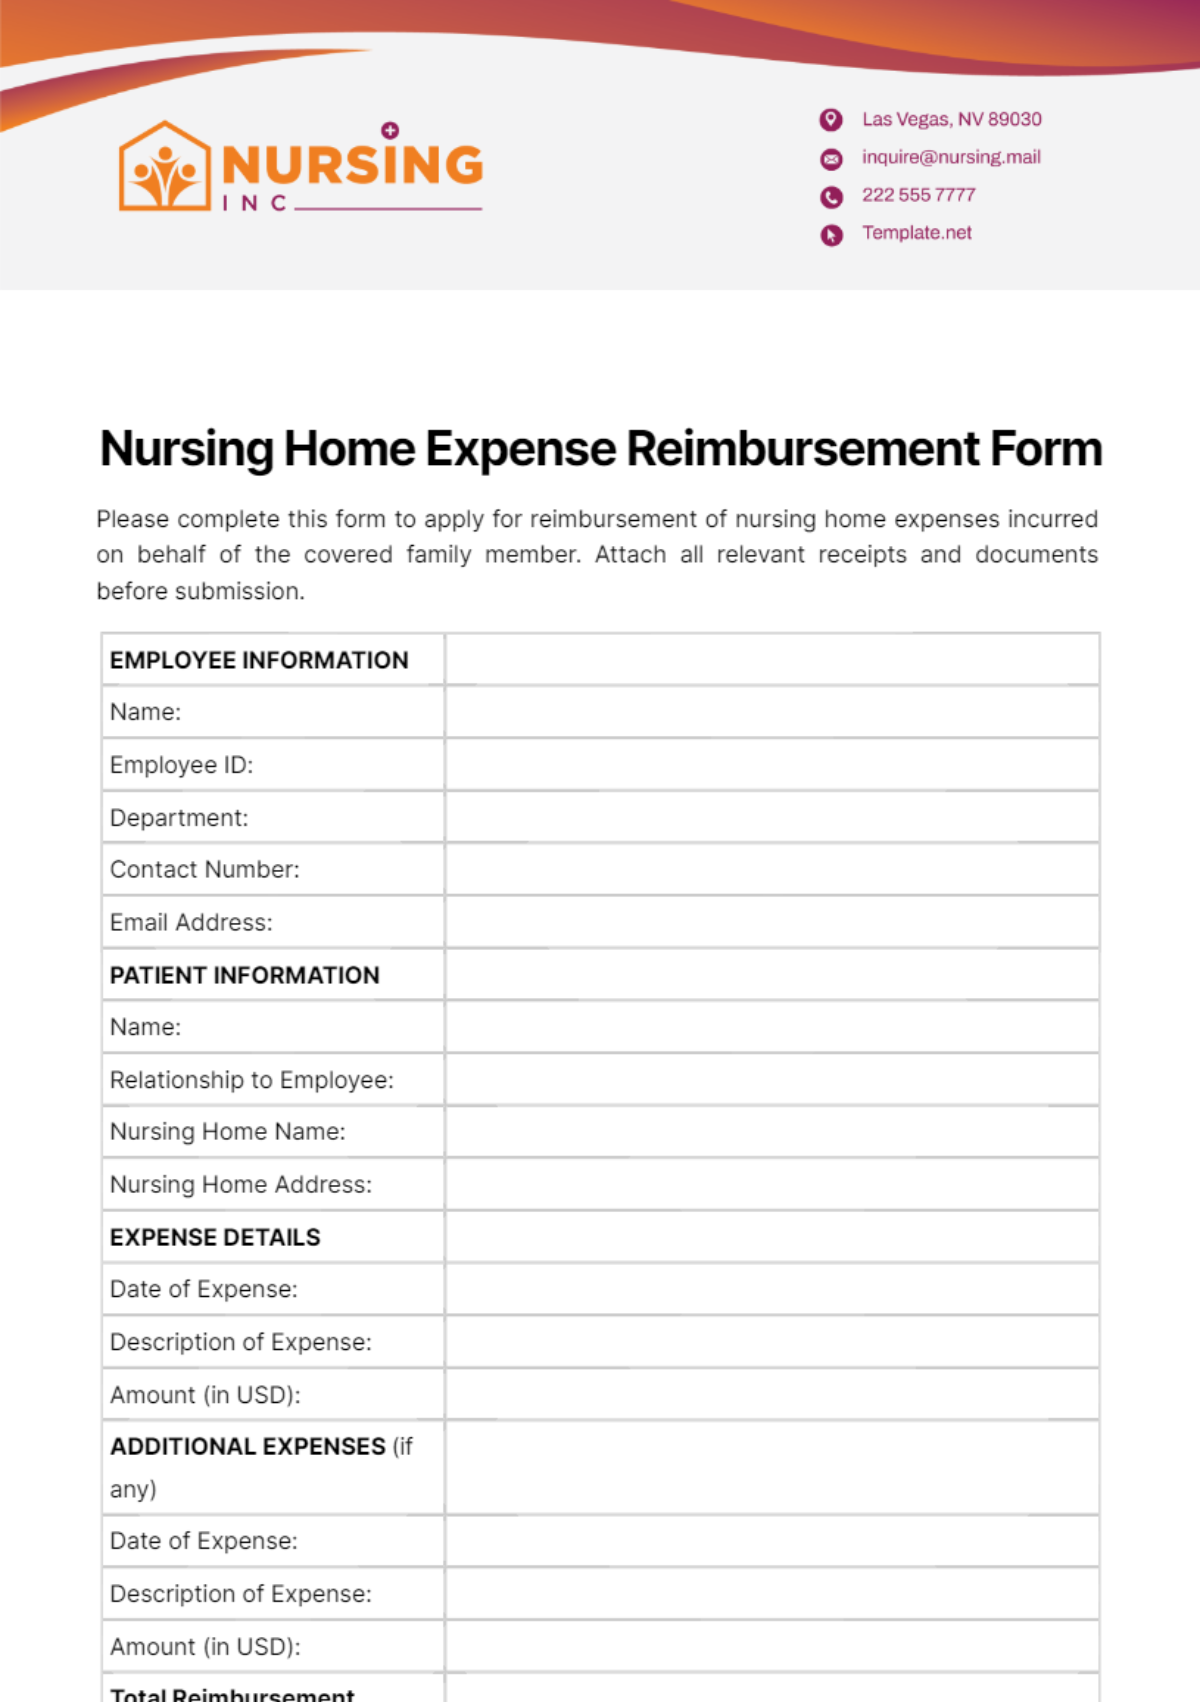 Nursing Home Expense Reimbursement Form Template